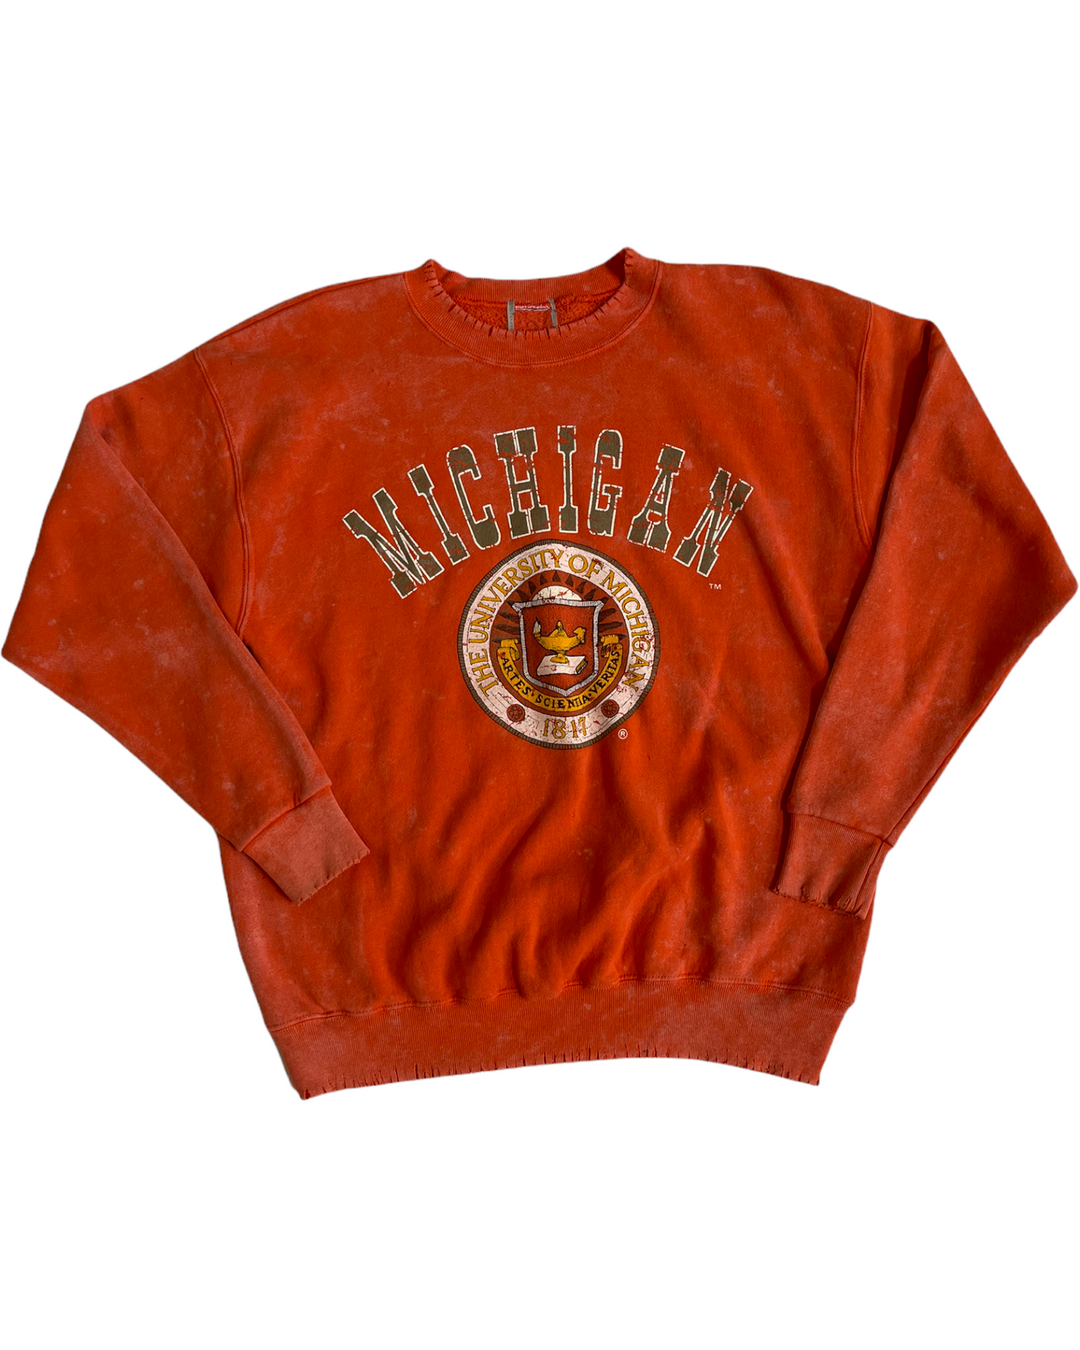 Michigan Vintage Reworked Dyed Sweatshirt